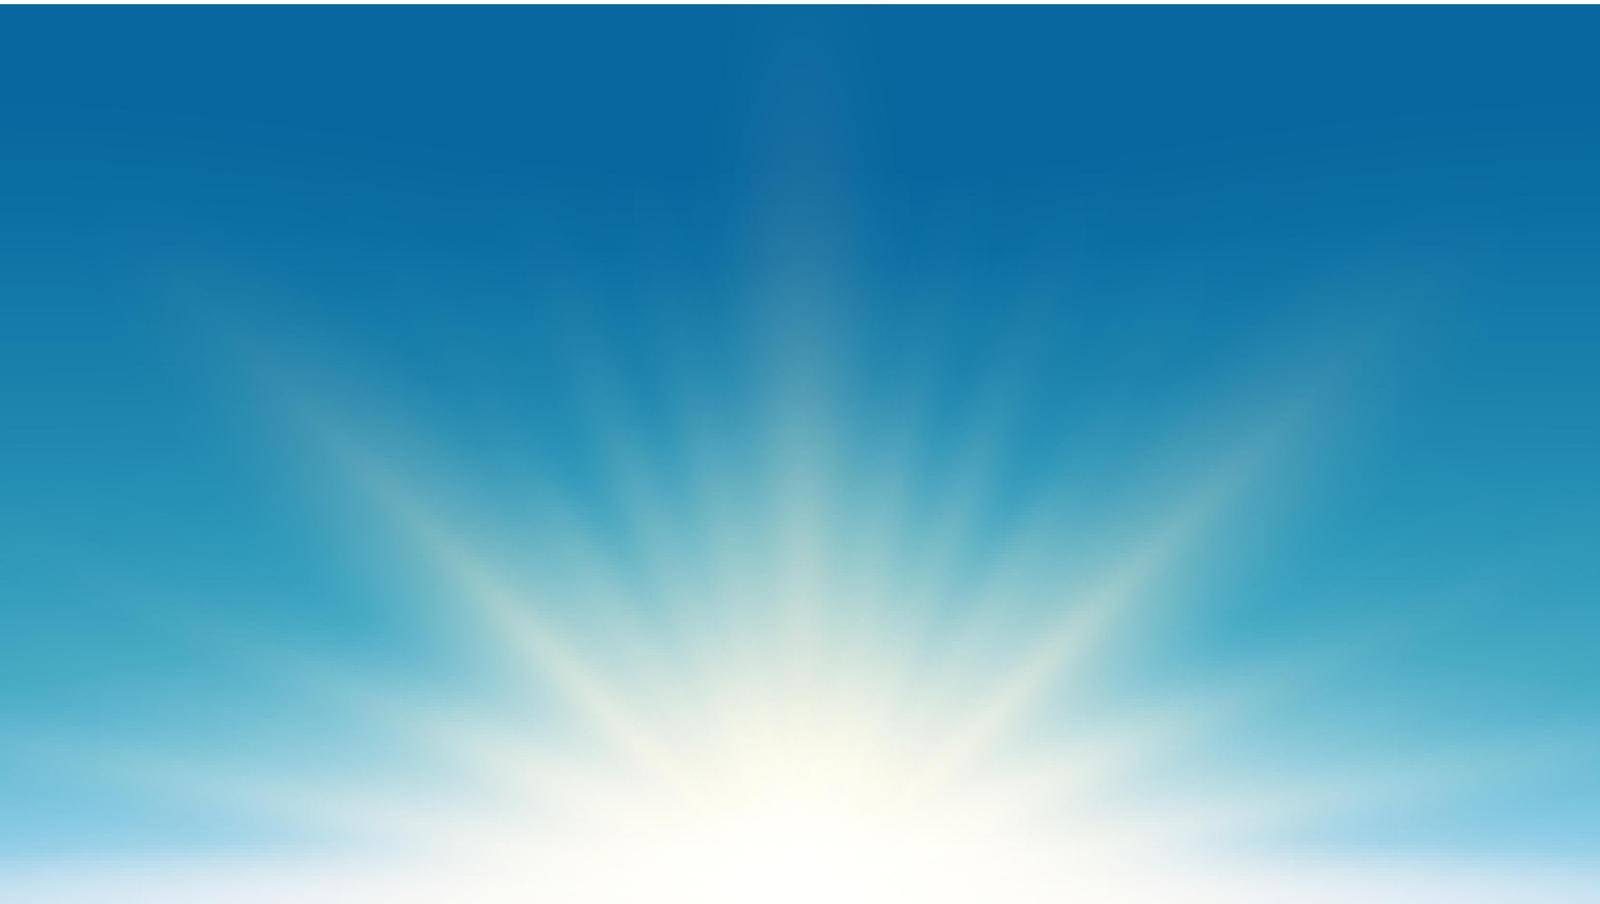 Summer sunlight glaring ray burst on blue sky nature background. Vector illustration